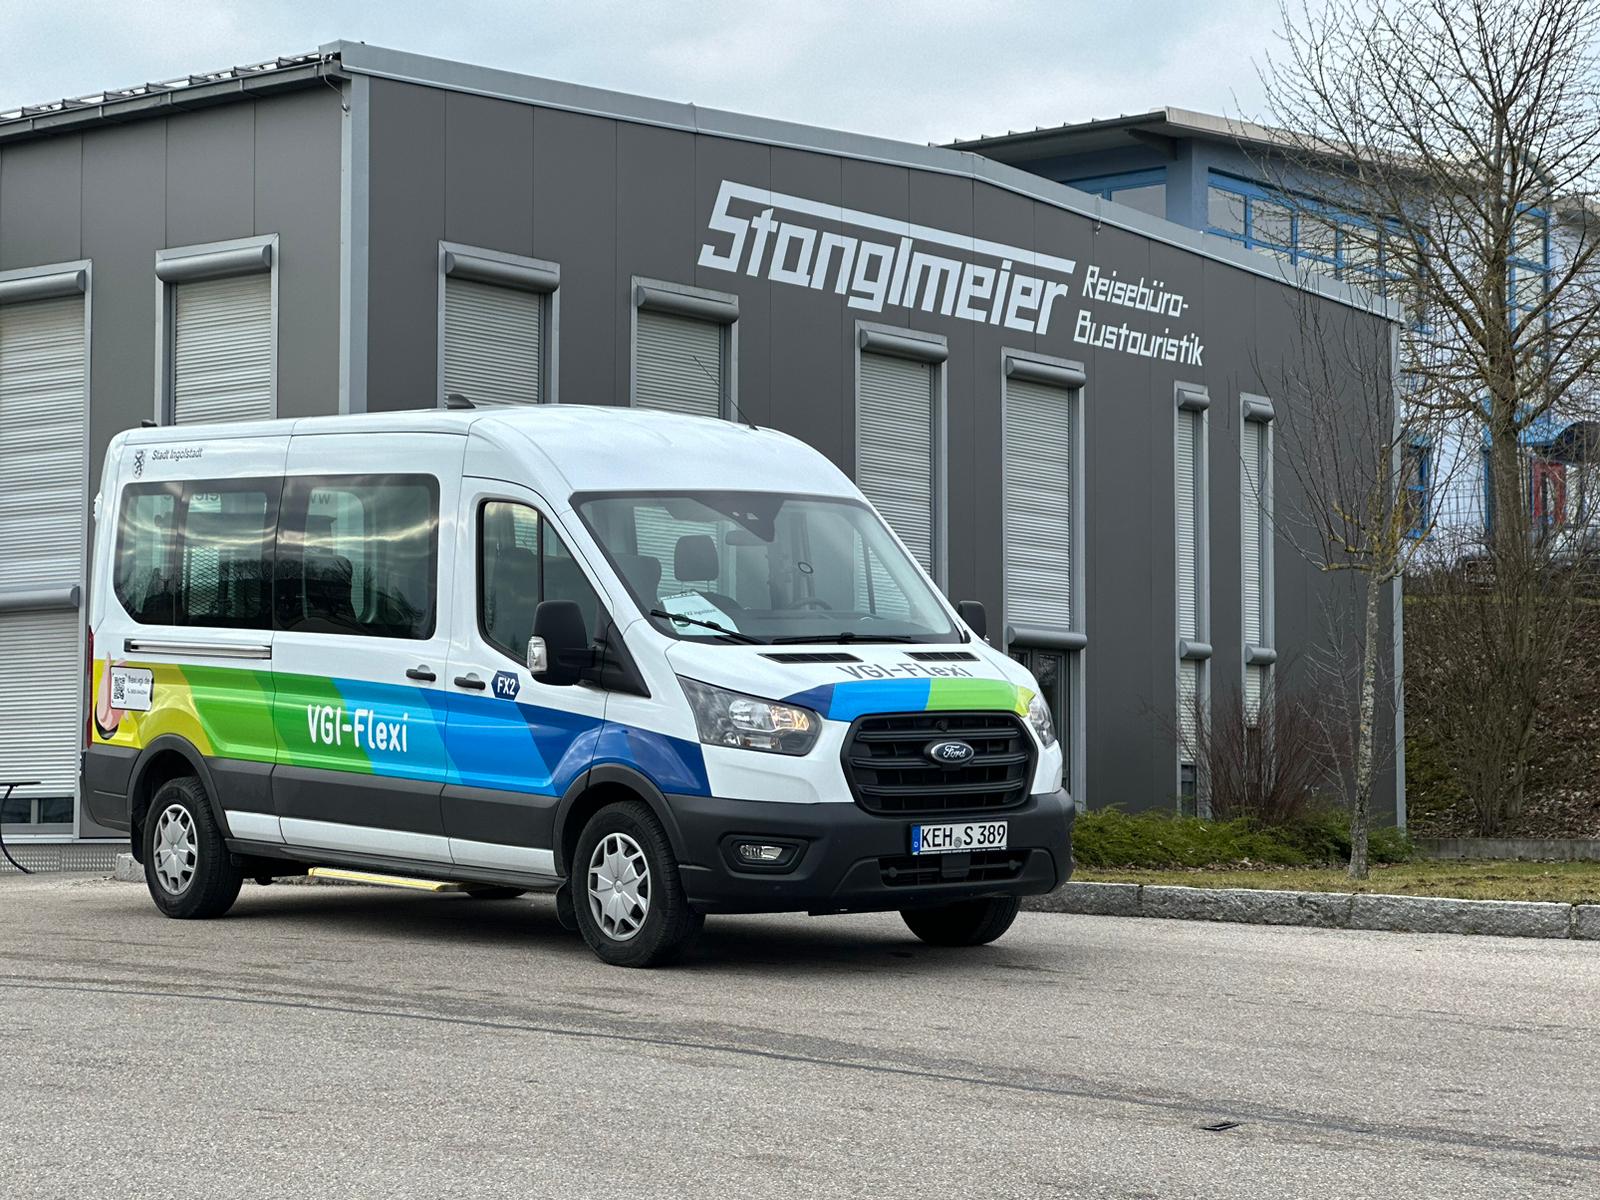 Stanglmeier Reisebüro und Bustouristik GmbH & Co. KG